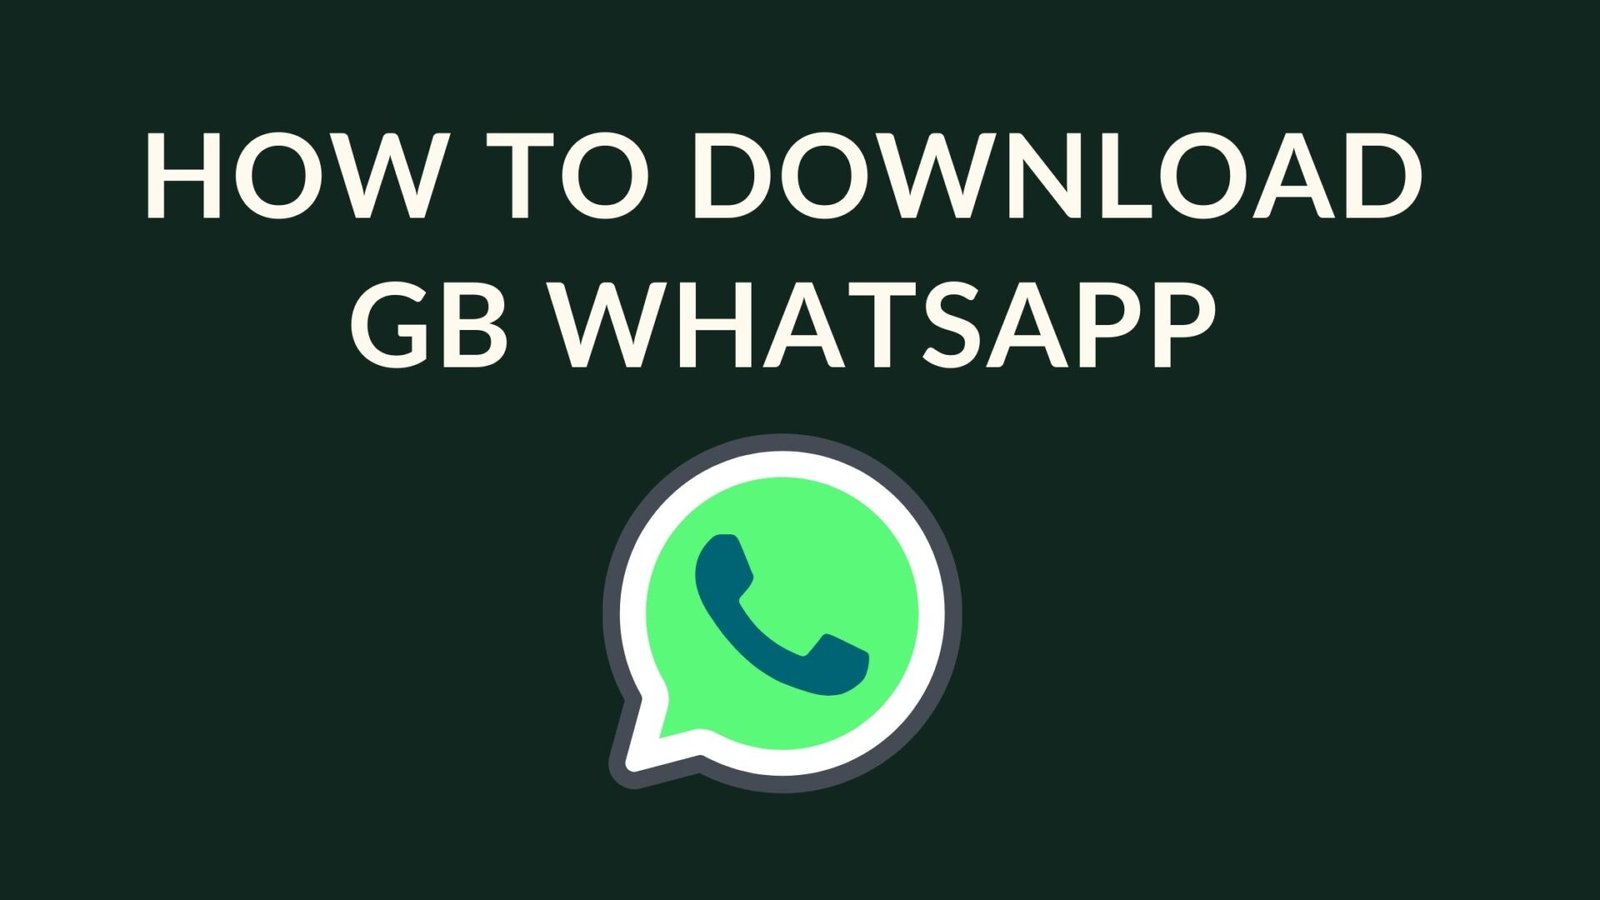 gb whatsapp 6.50 download 2021